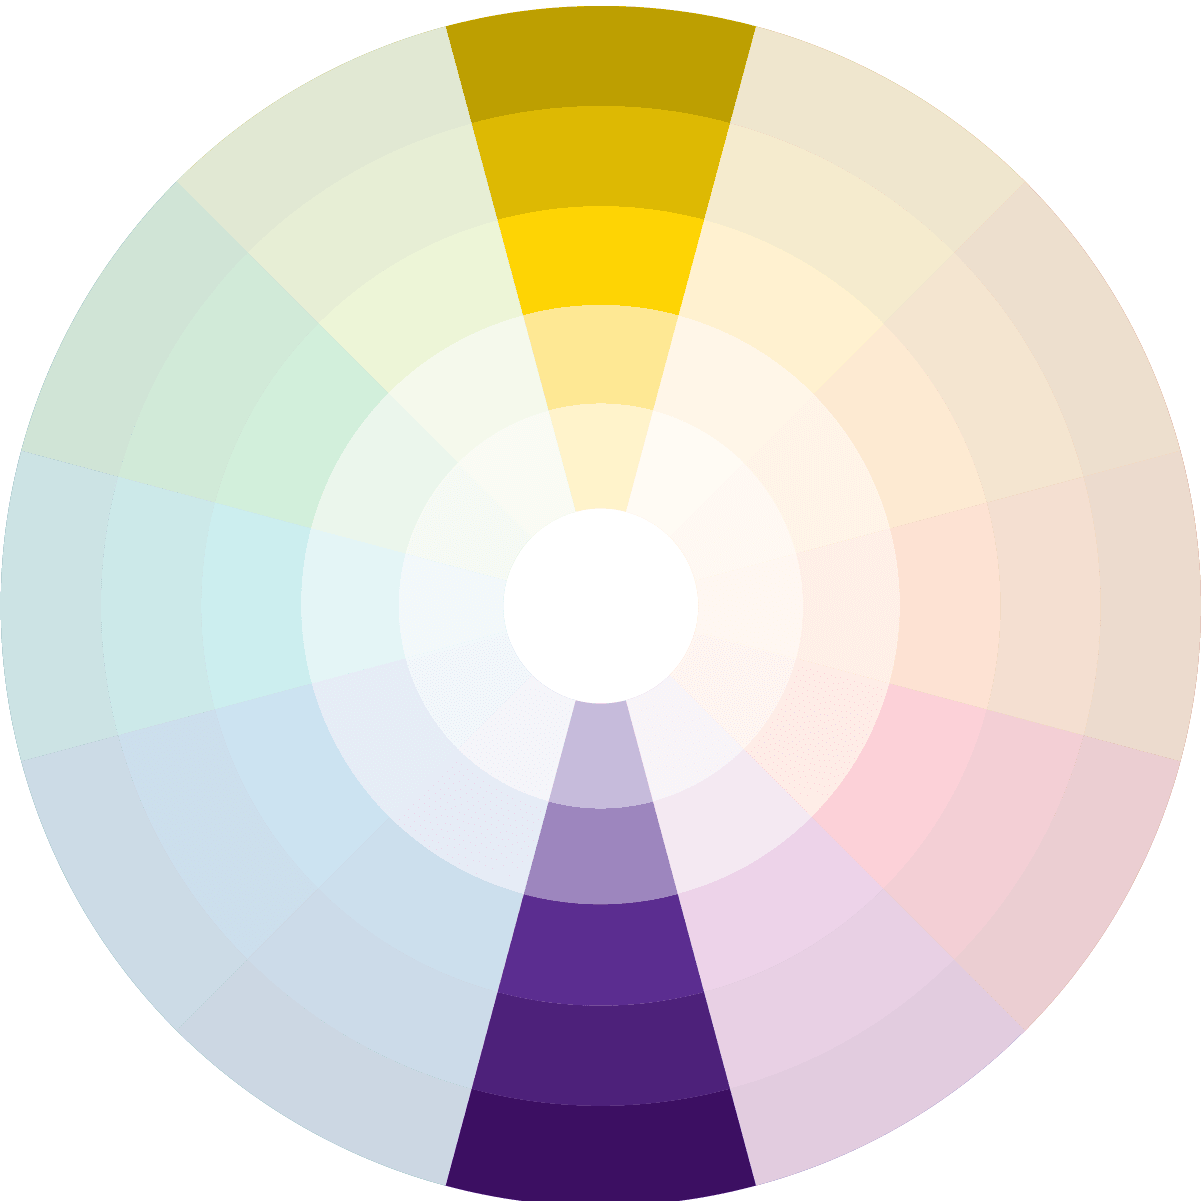 Cores opostas ou complementares em tons de amarelo e roxo do círculo cromático | Tons de tintas encontradas na Suvinil